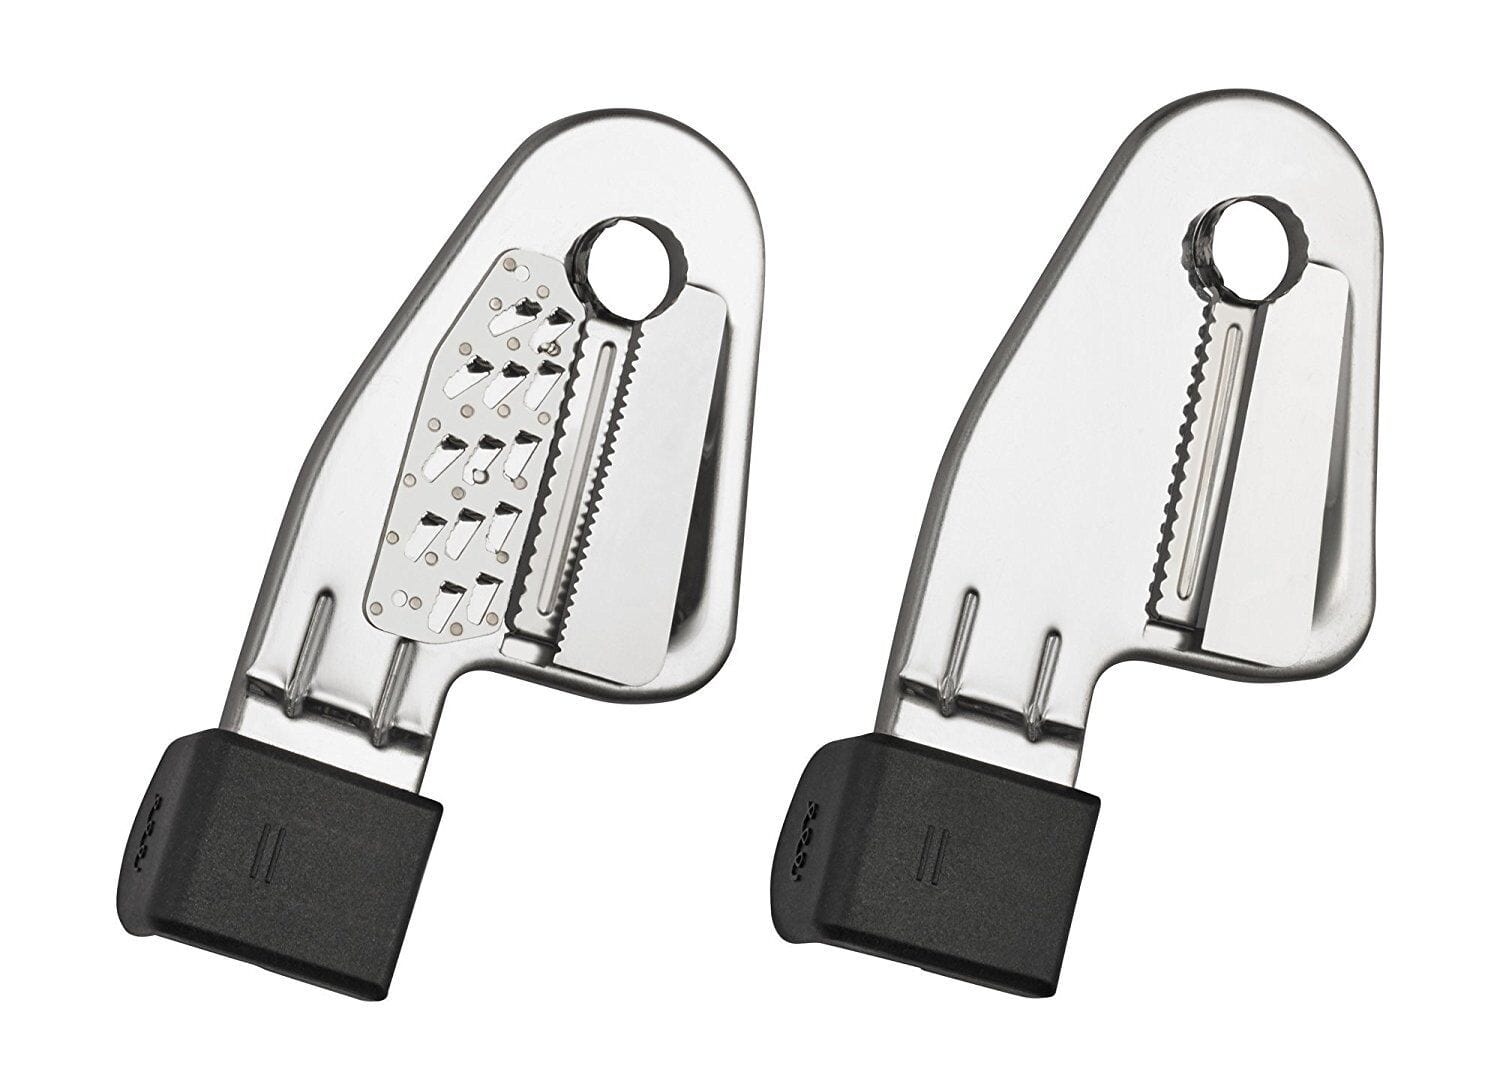 KitchenAid Mixer Attachments KitchenAid Thin Blade Set for Spiralizer Attachment, Silver